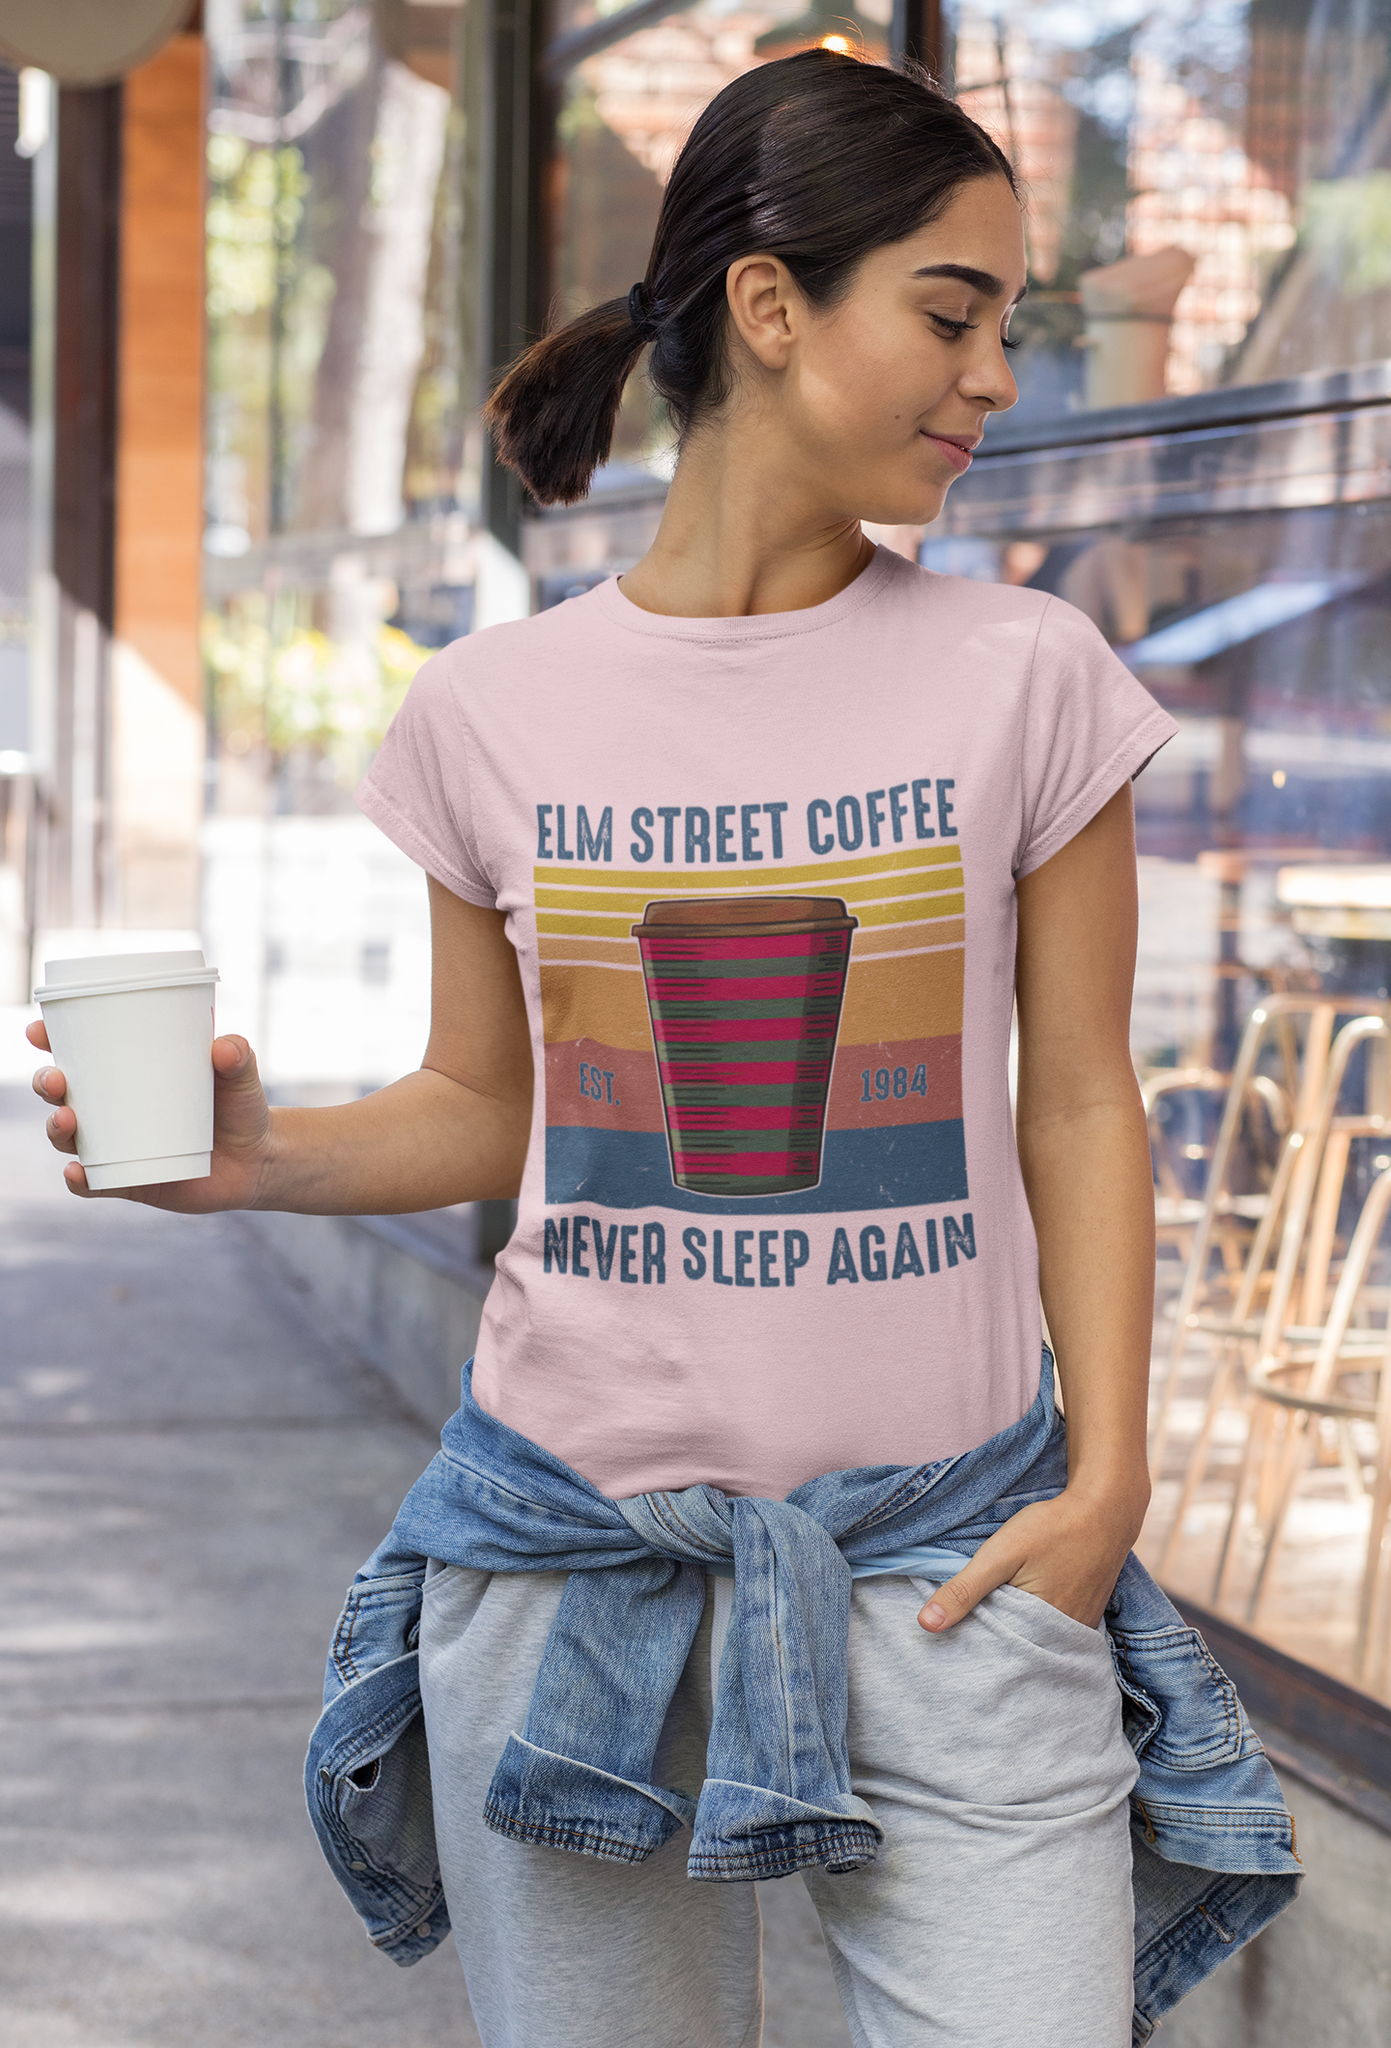 Nightmare On Elm Street Vintage T Shirt, Elm Street Coffee Tshirt, Never Sleep Again T Shirt, Halloween Gifts